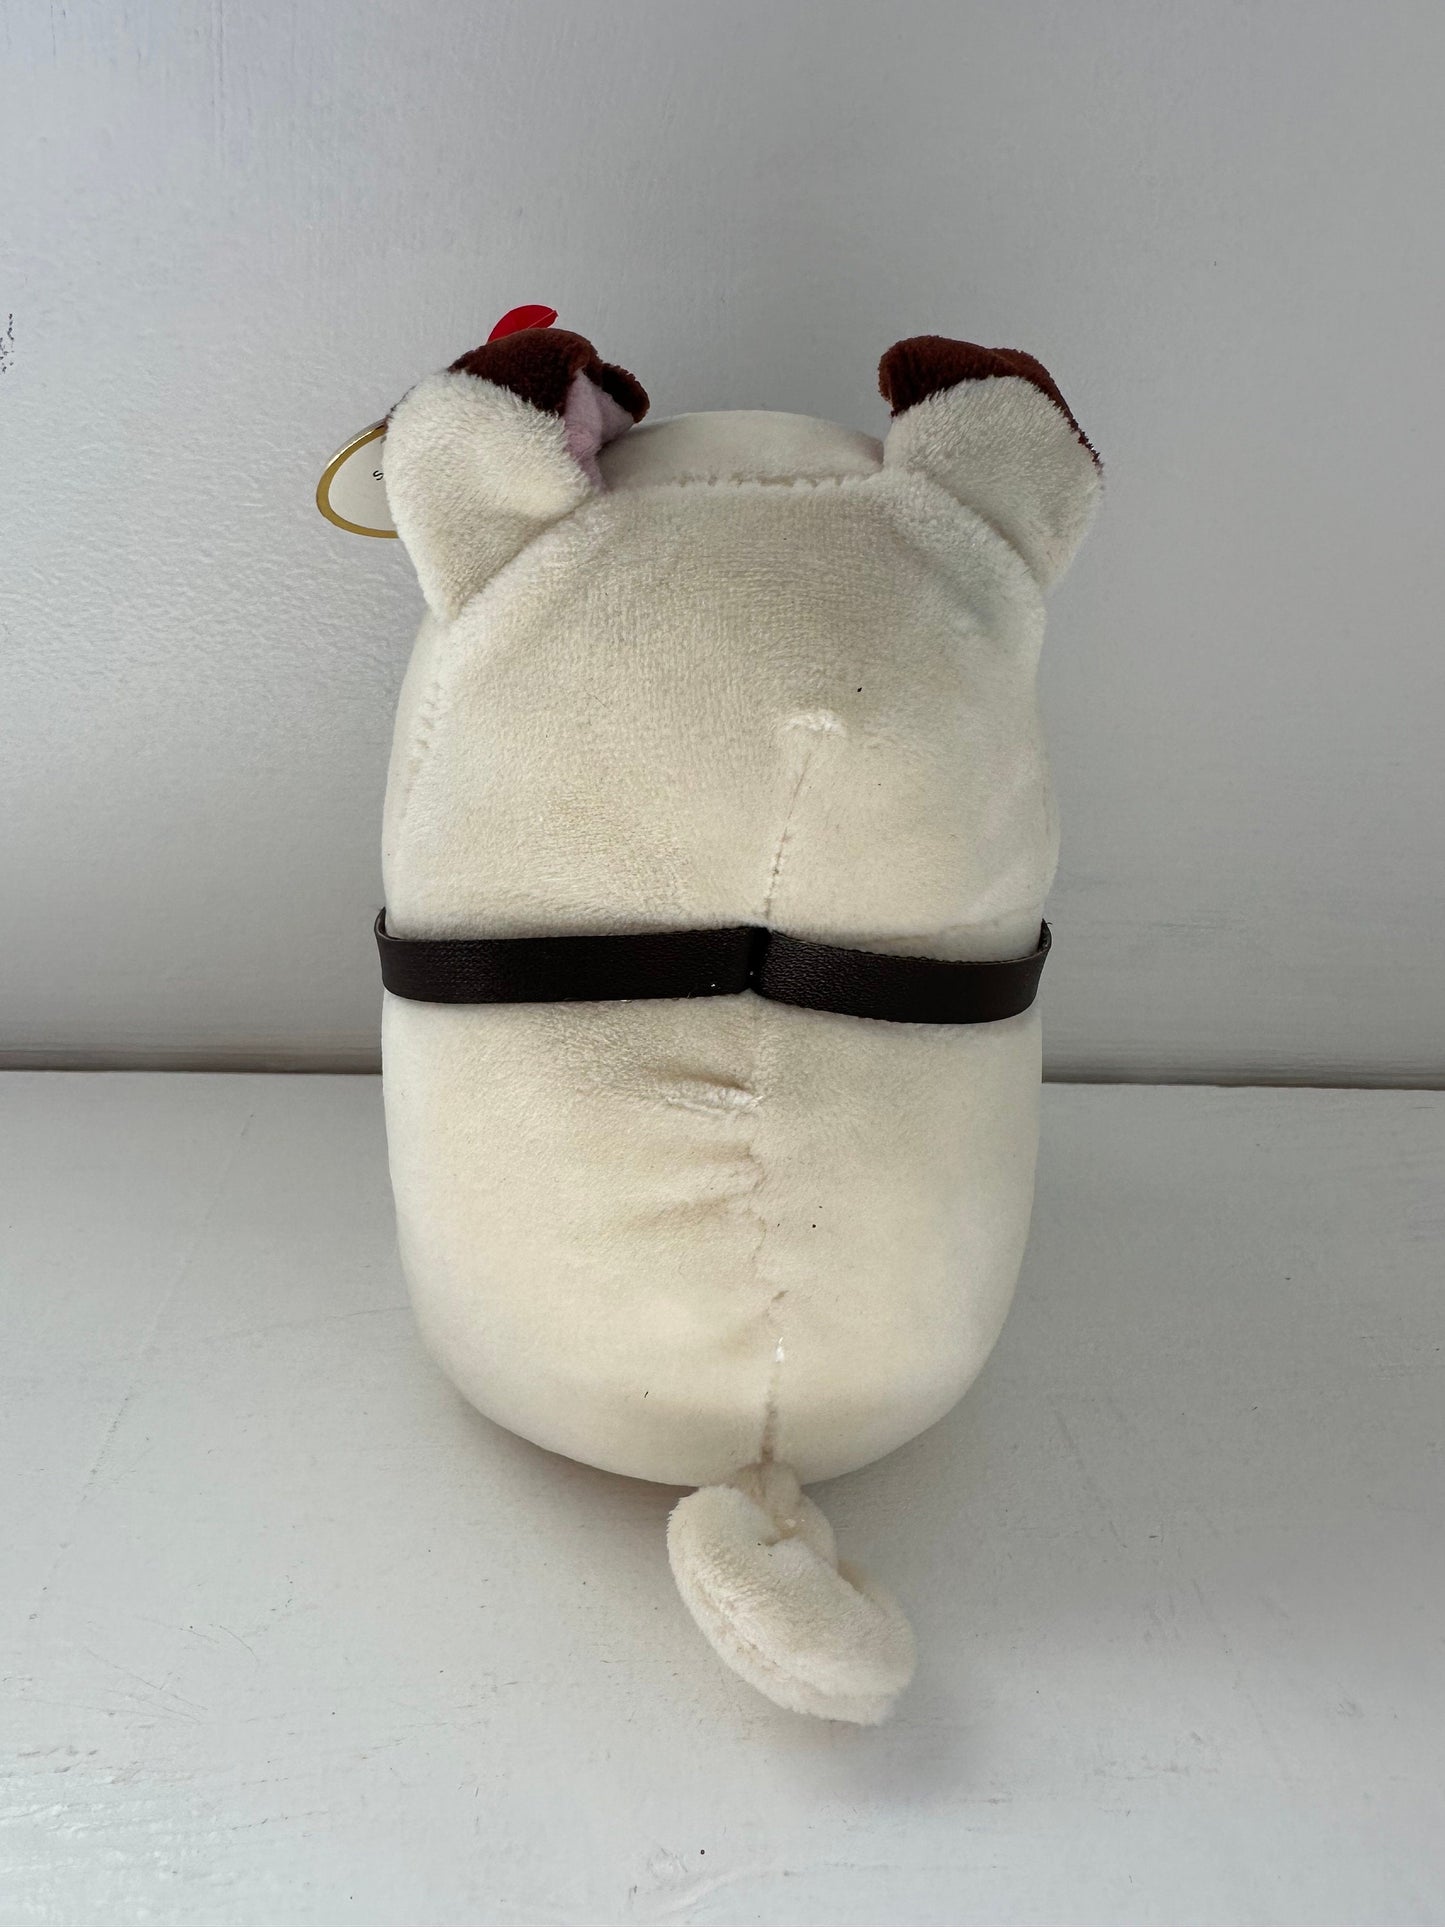 Ty Beanie Buddy “Mel” the Pug Dog - Secret Life of Pets (6 inch)